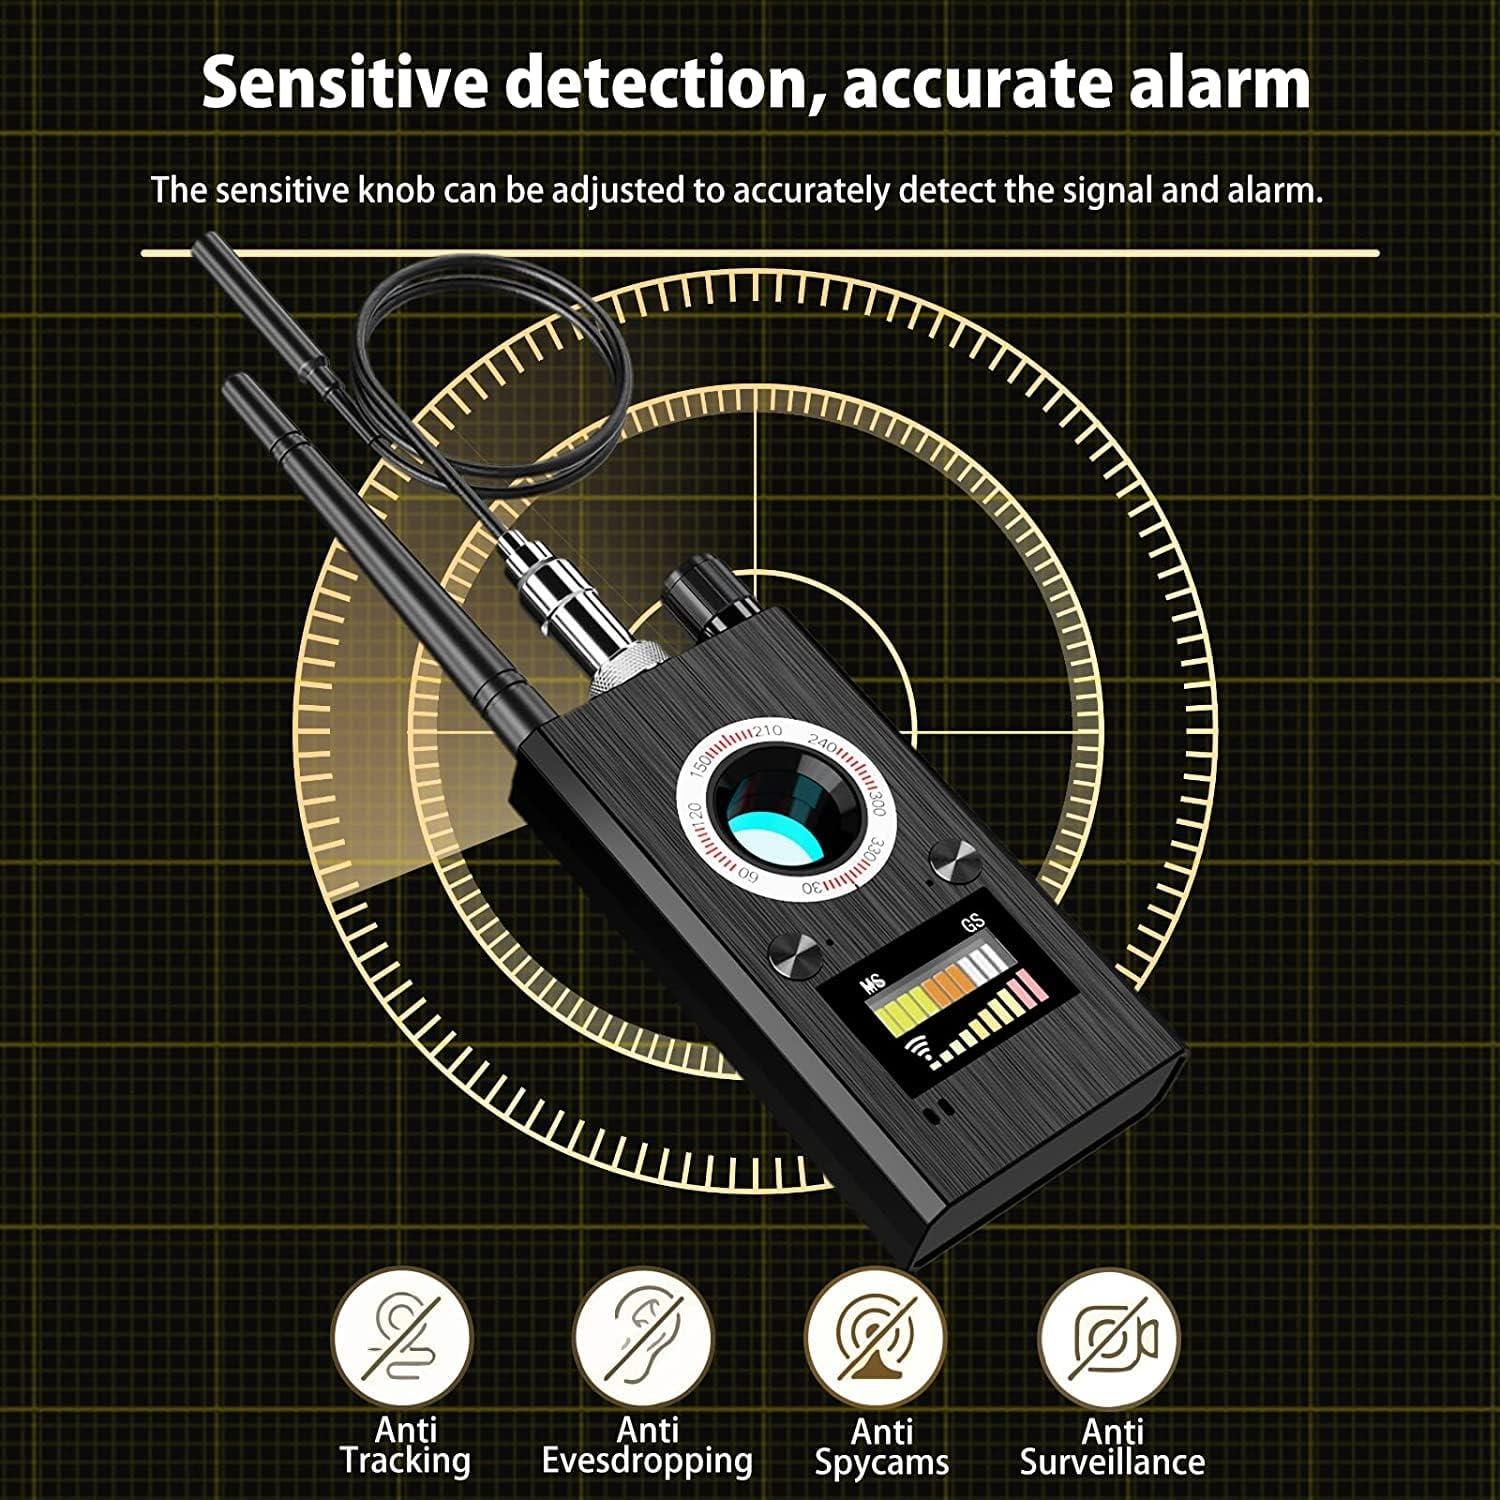 K18 GPS Tracker Finder + Spy Bug Wireless RF Signal Detector